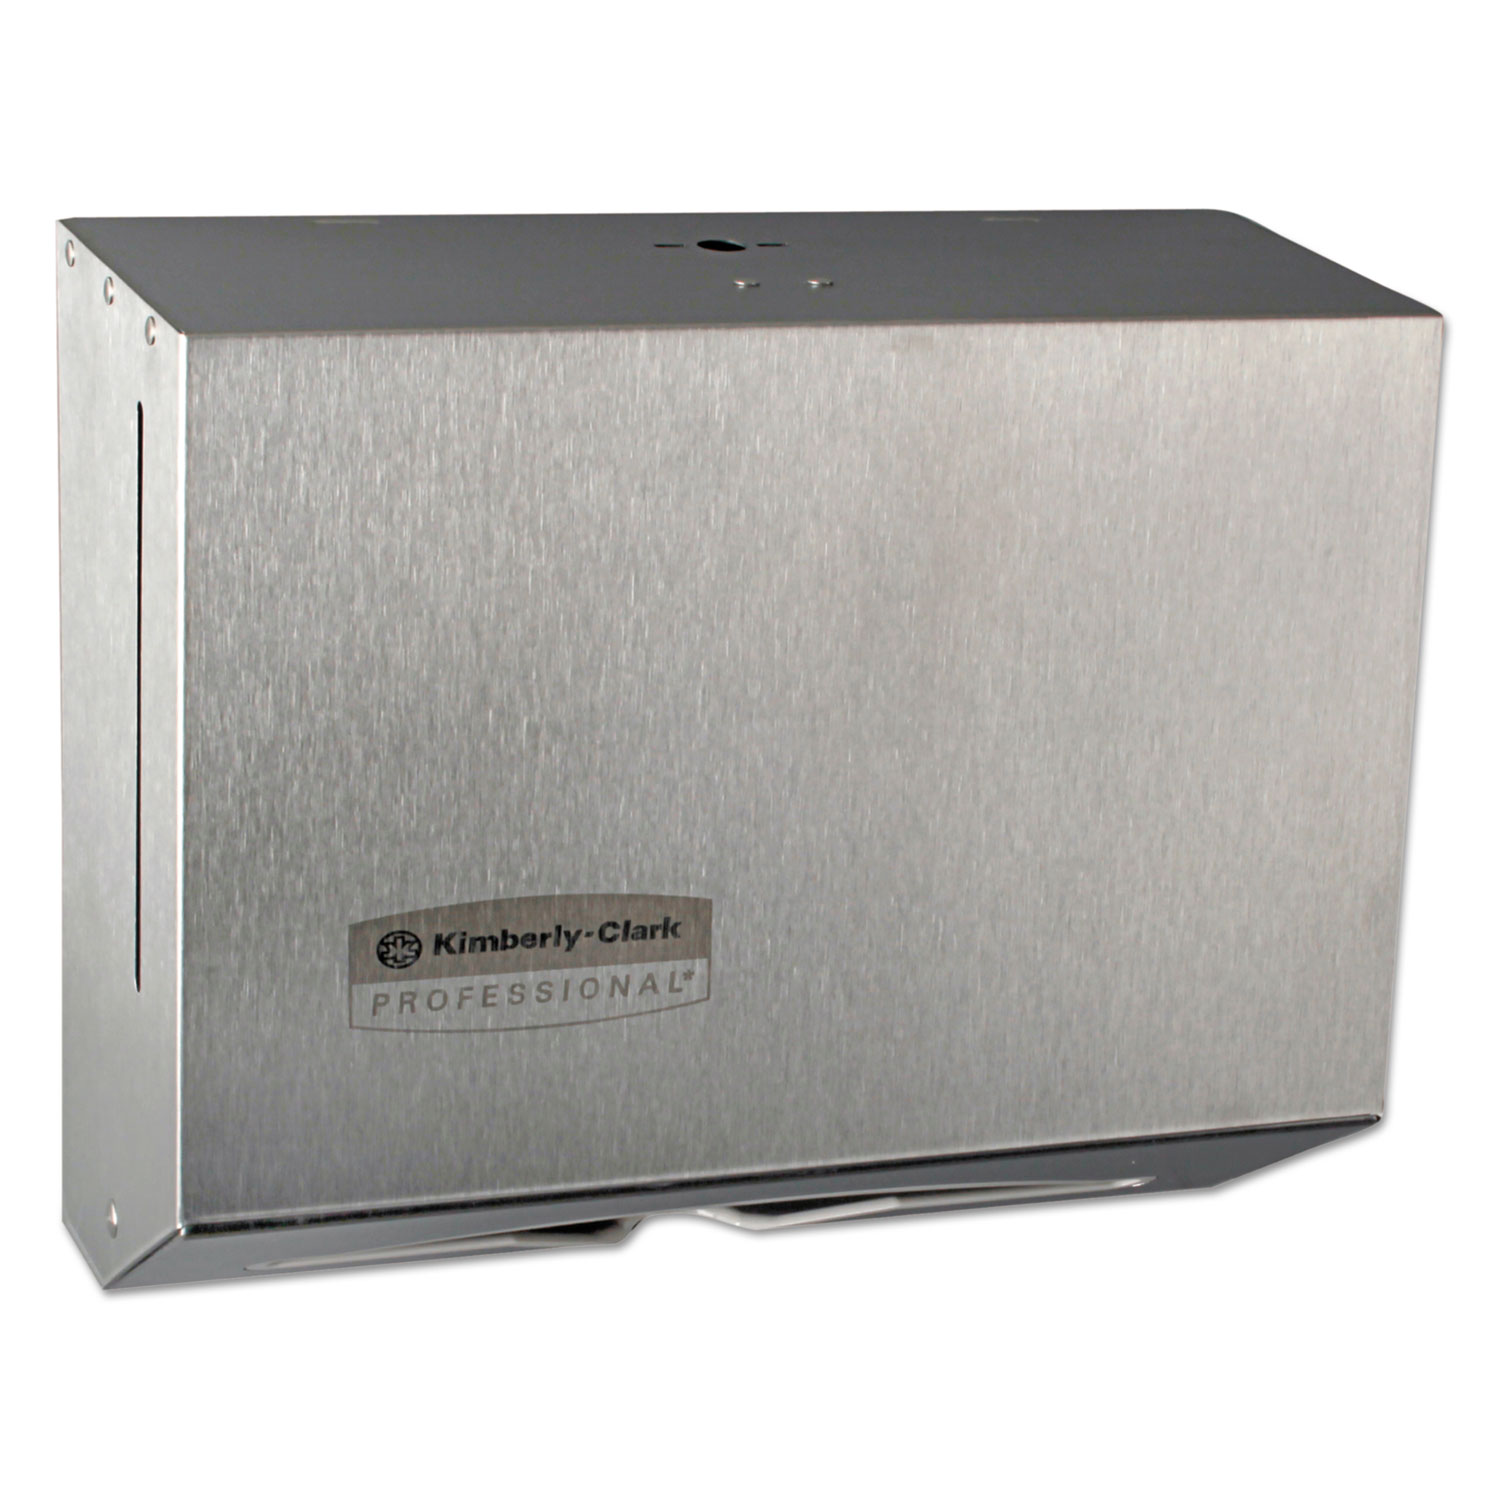  Kimberly-Clark Professional* KCC 09216 Windows Scottfold Compact Towel Dispenser, 10 3/5 x 9 x 4 3/4, Stainless Steel (KCC09216) 